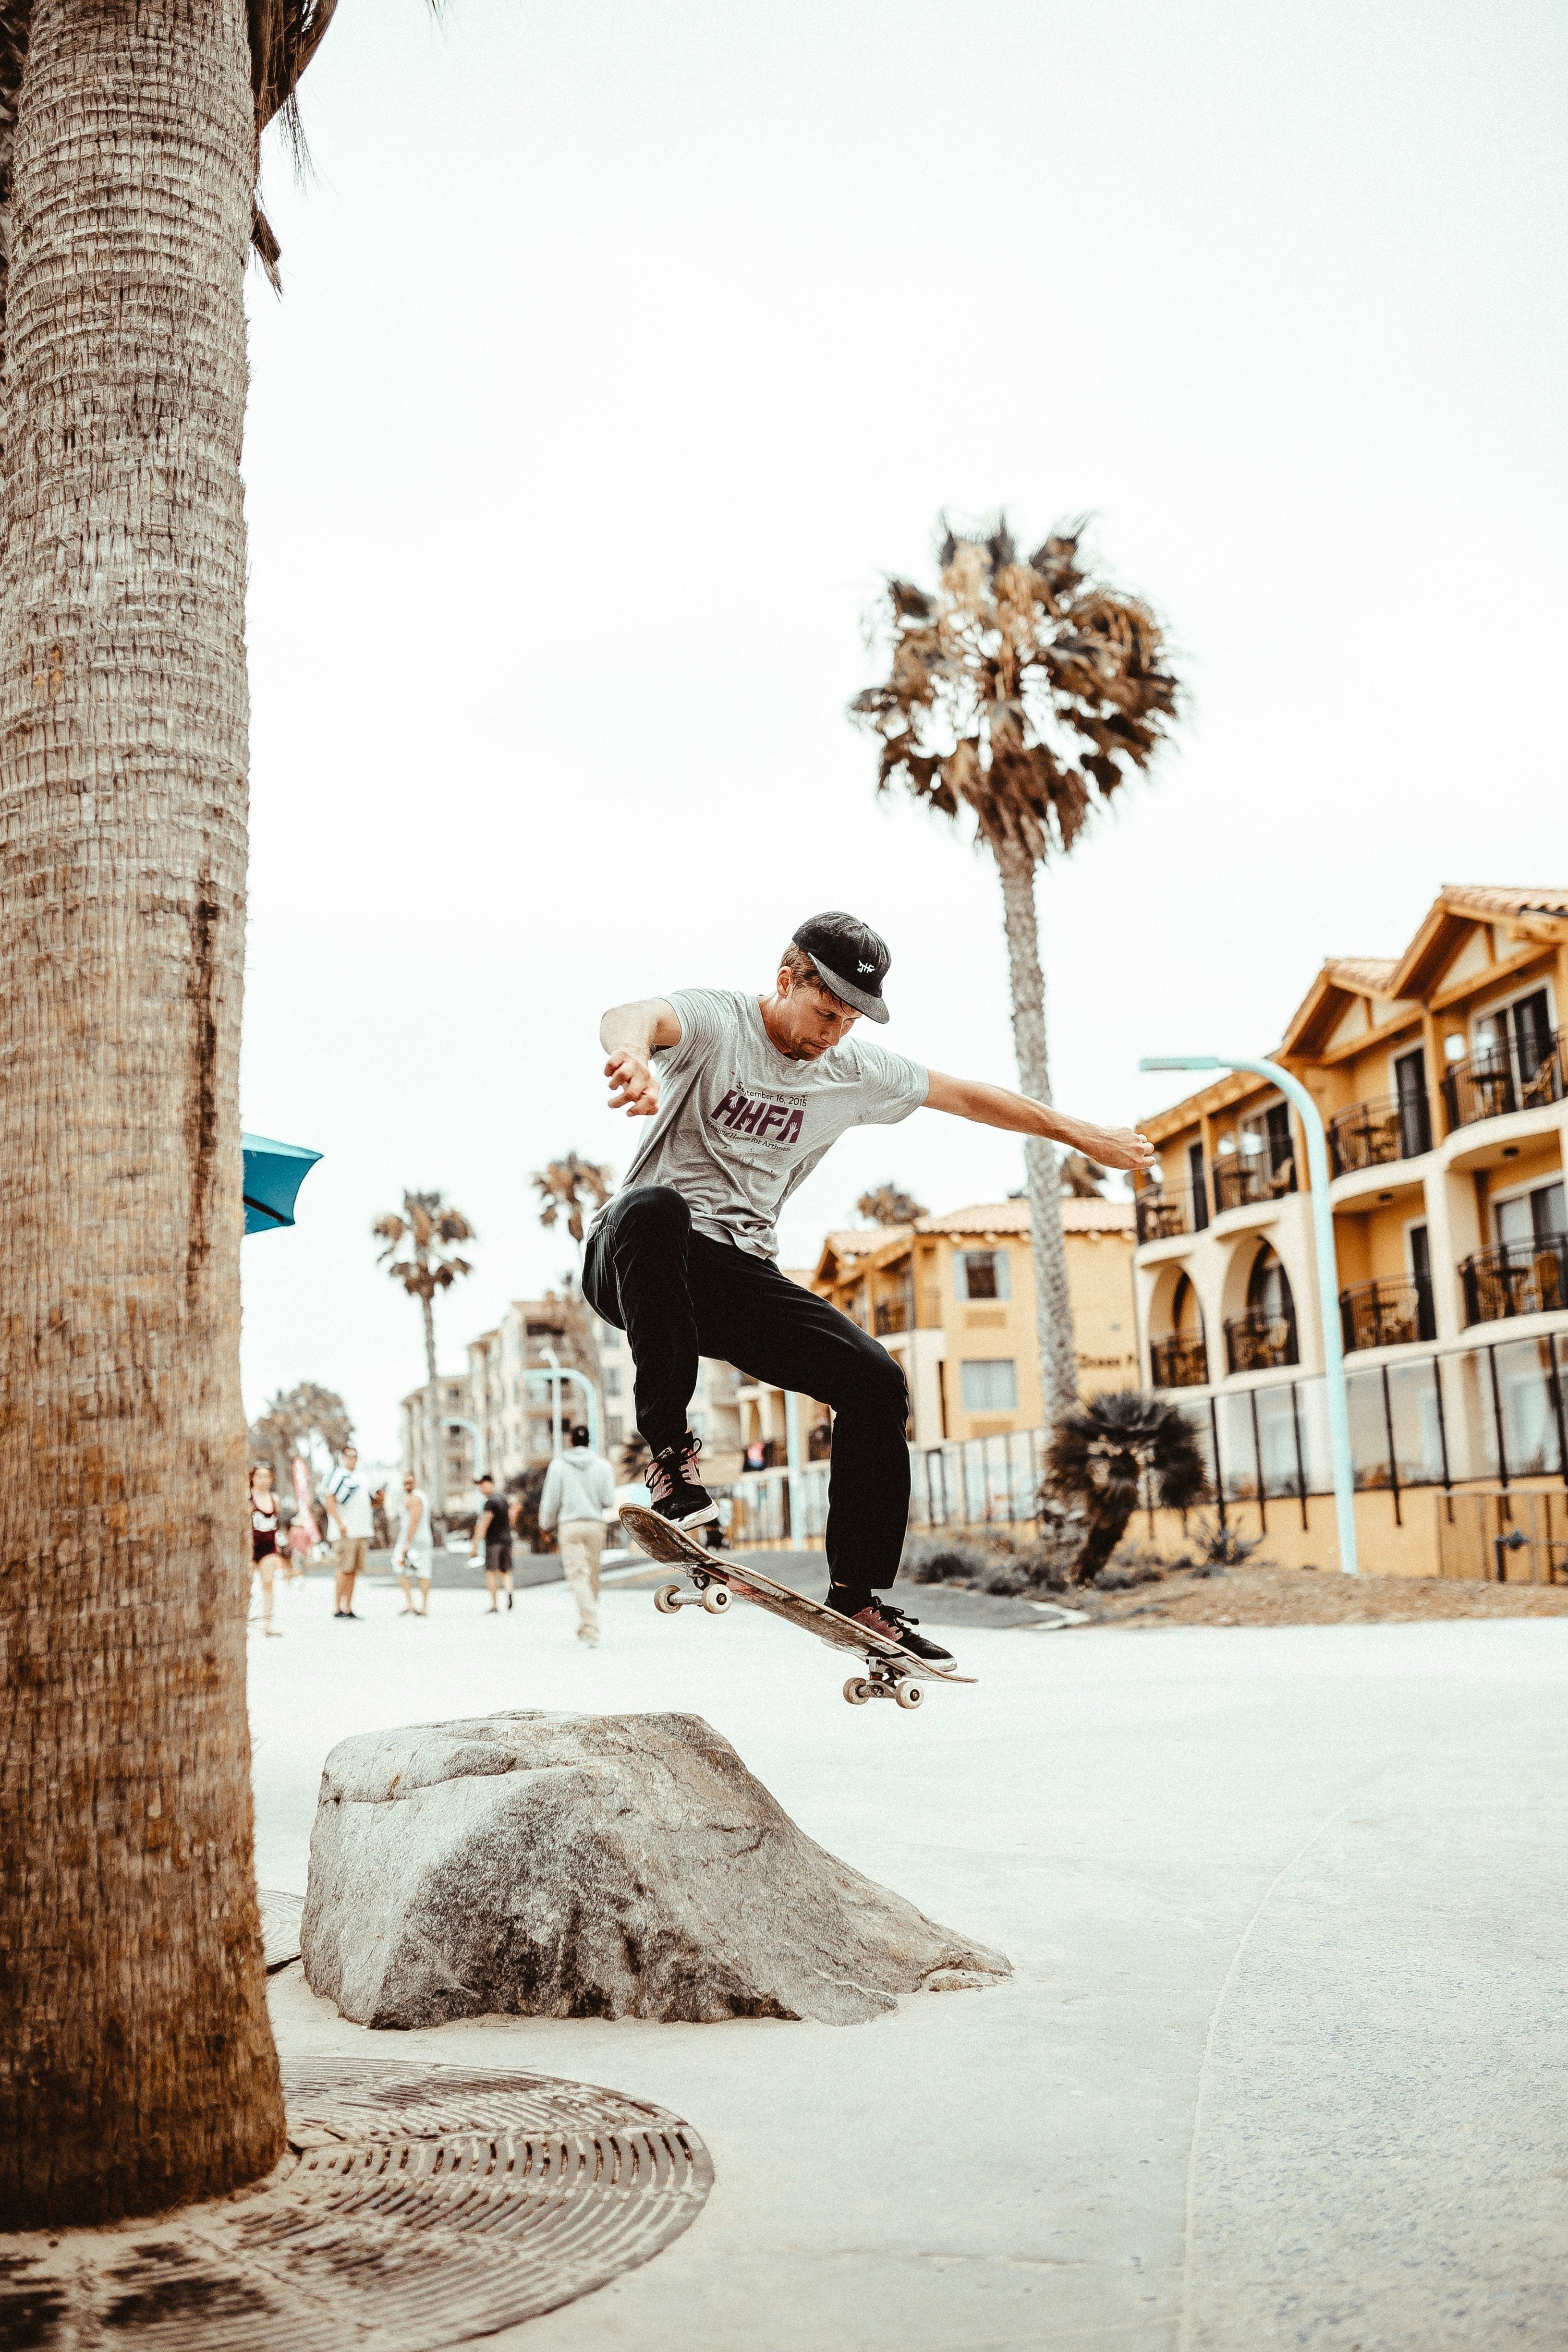 Street Skateboarding Complete Guide]